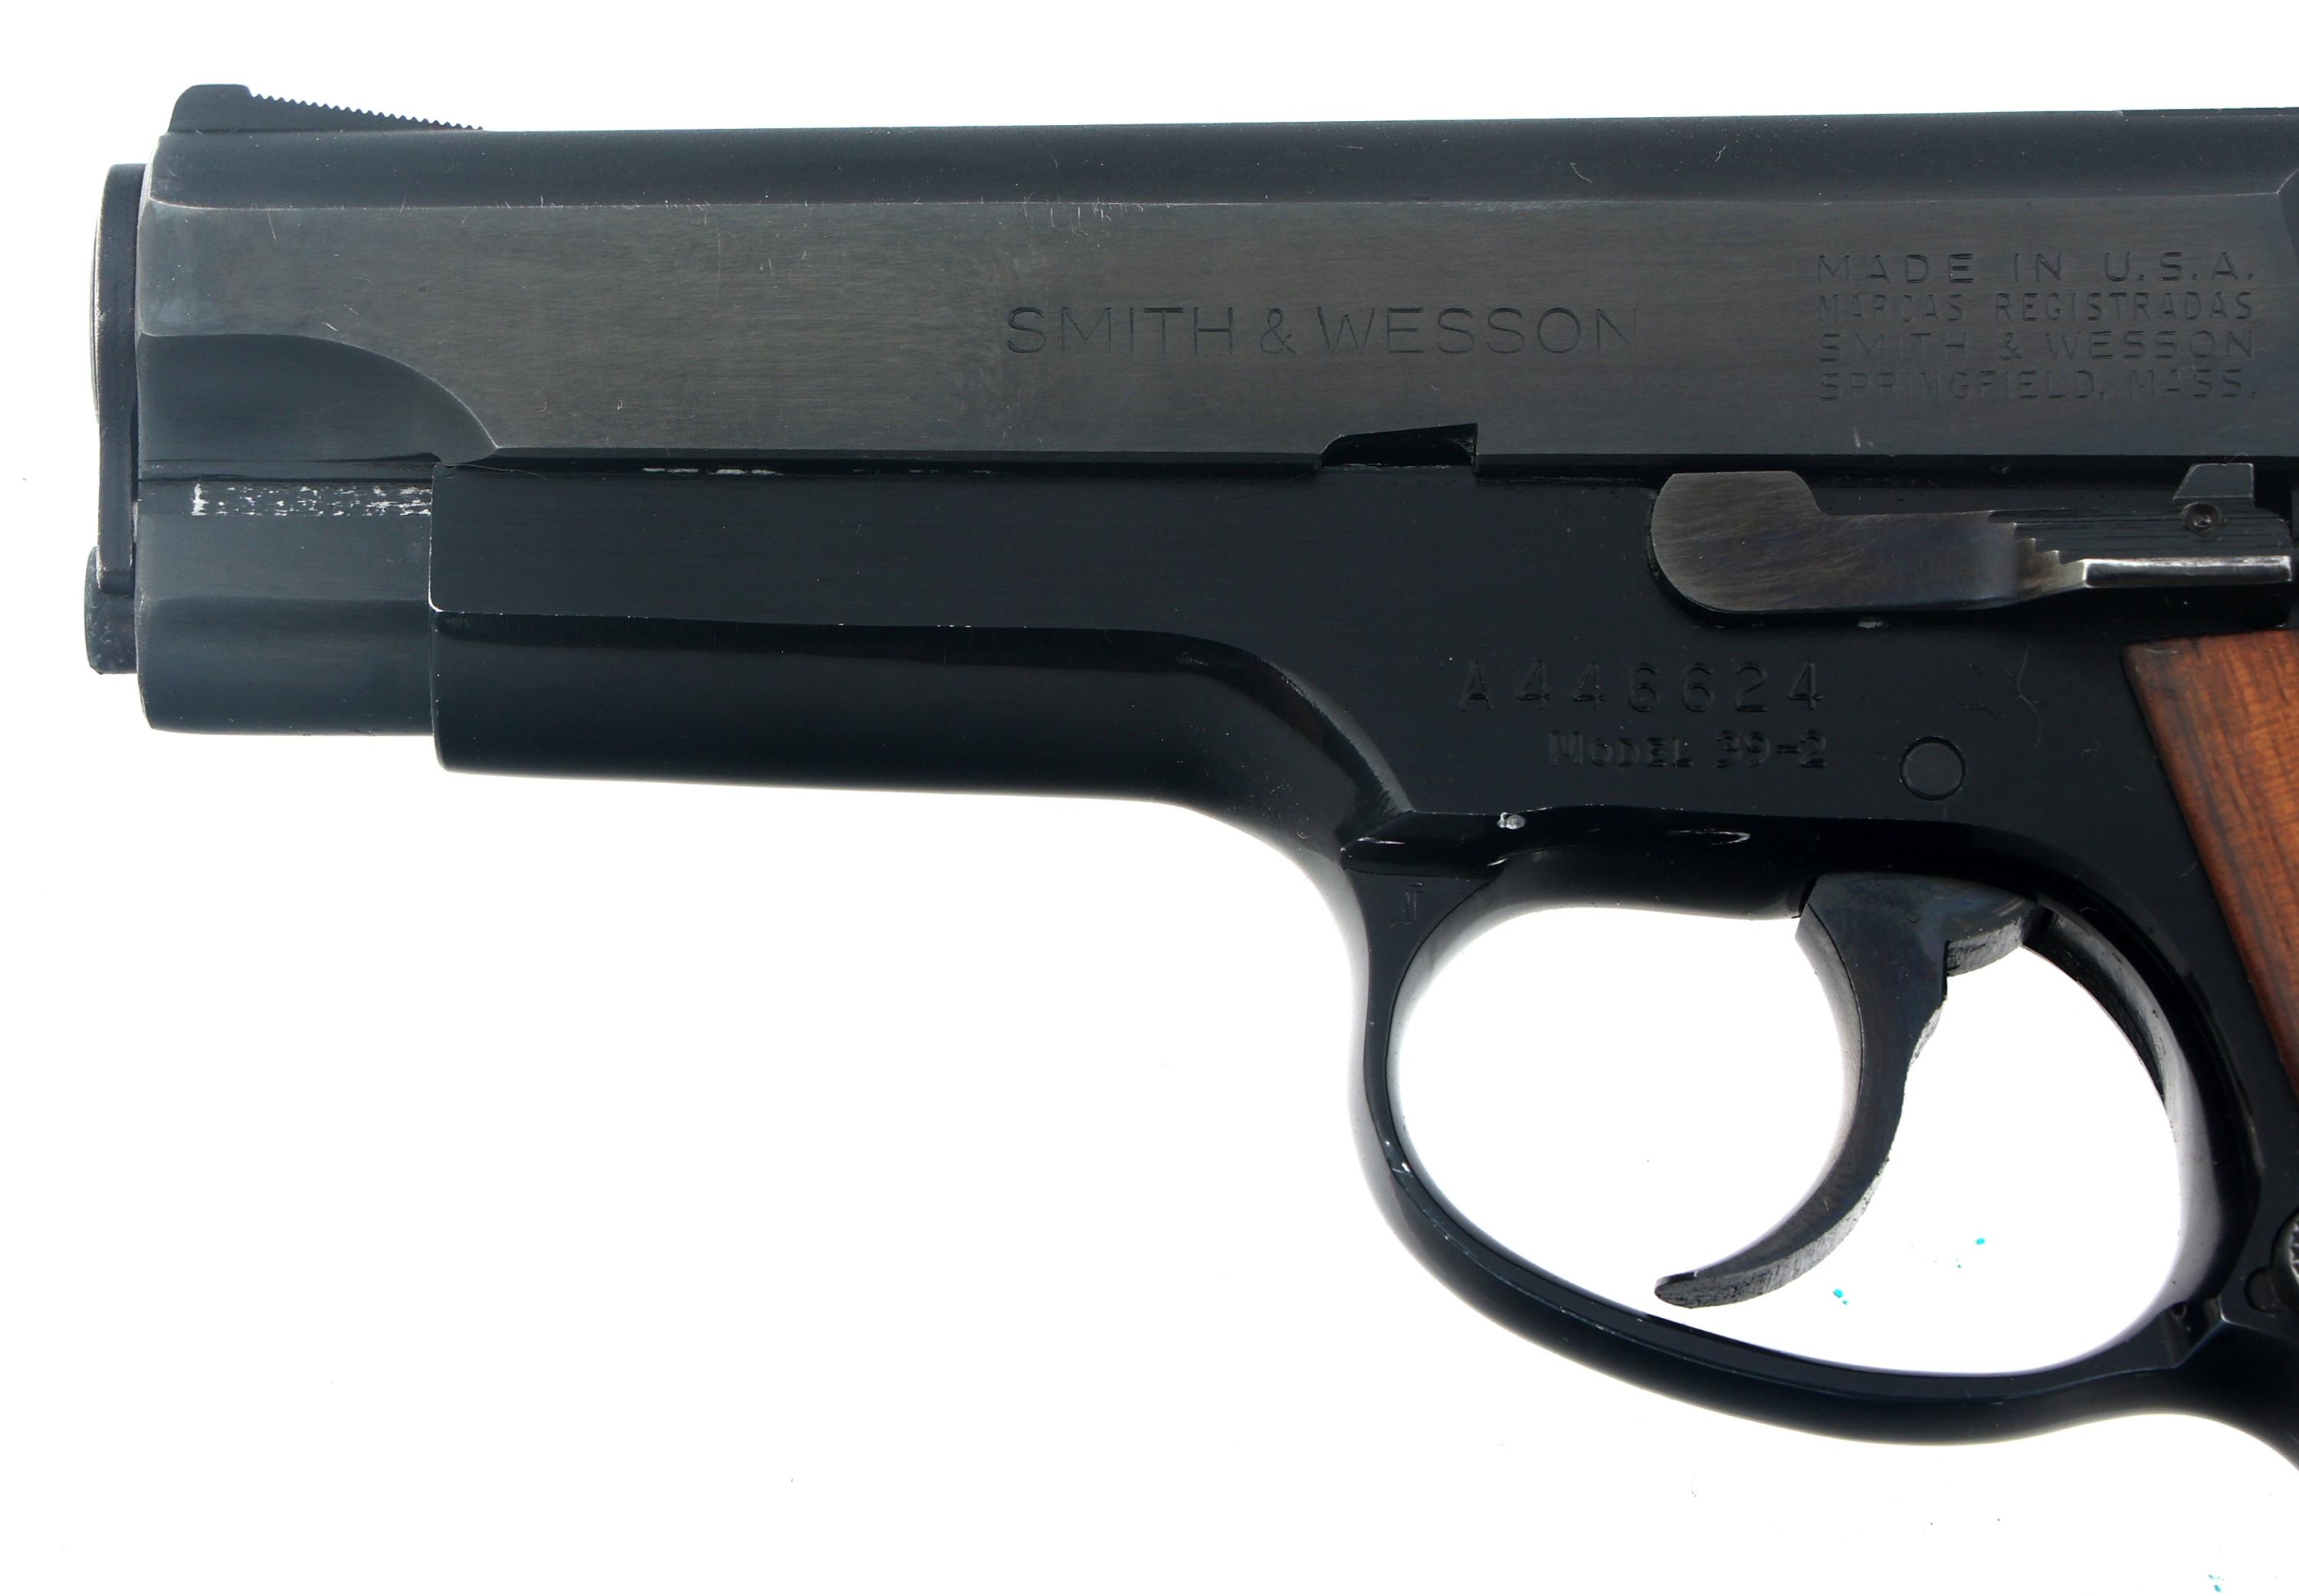 SMITH & WESSON MODEL 39-2 9x19mm CALIBER PISTOL